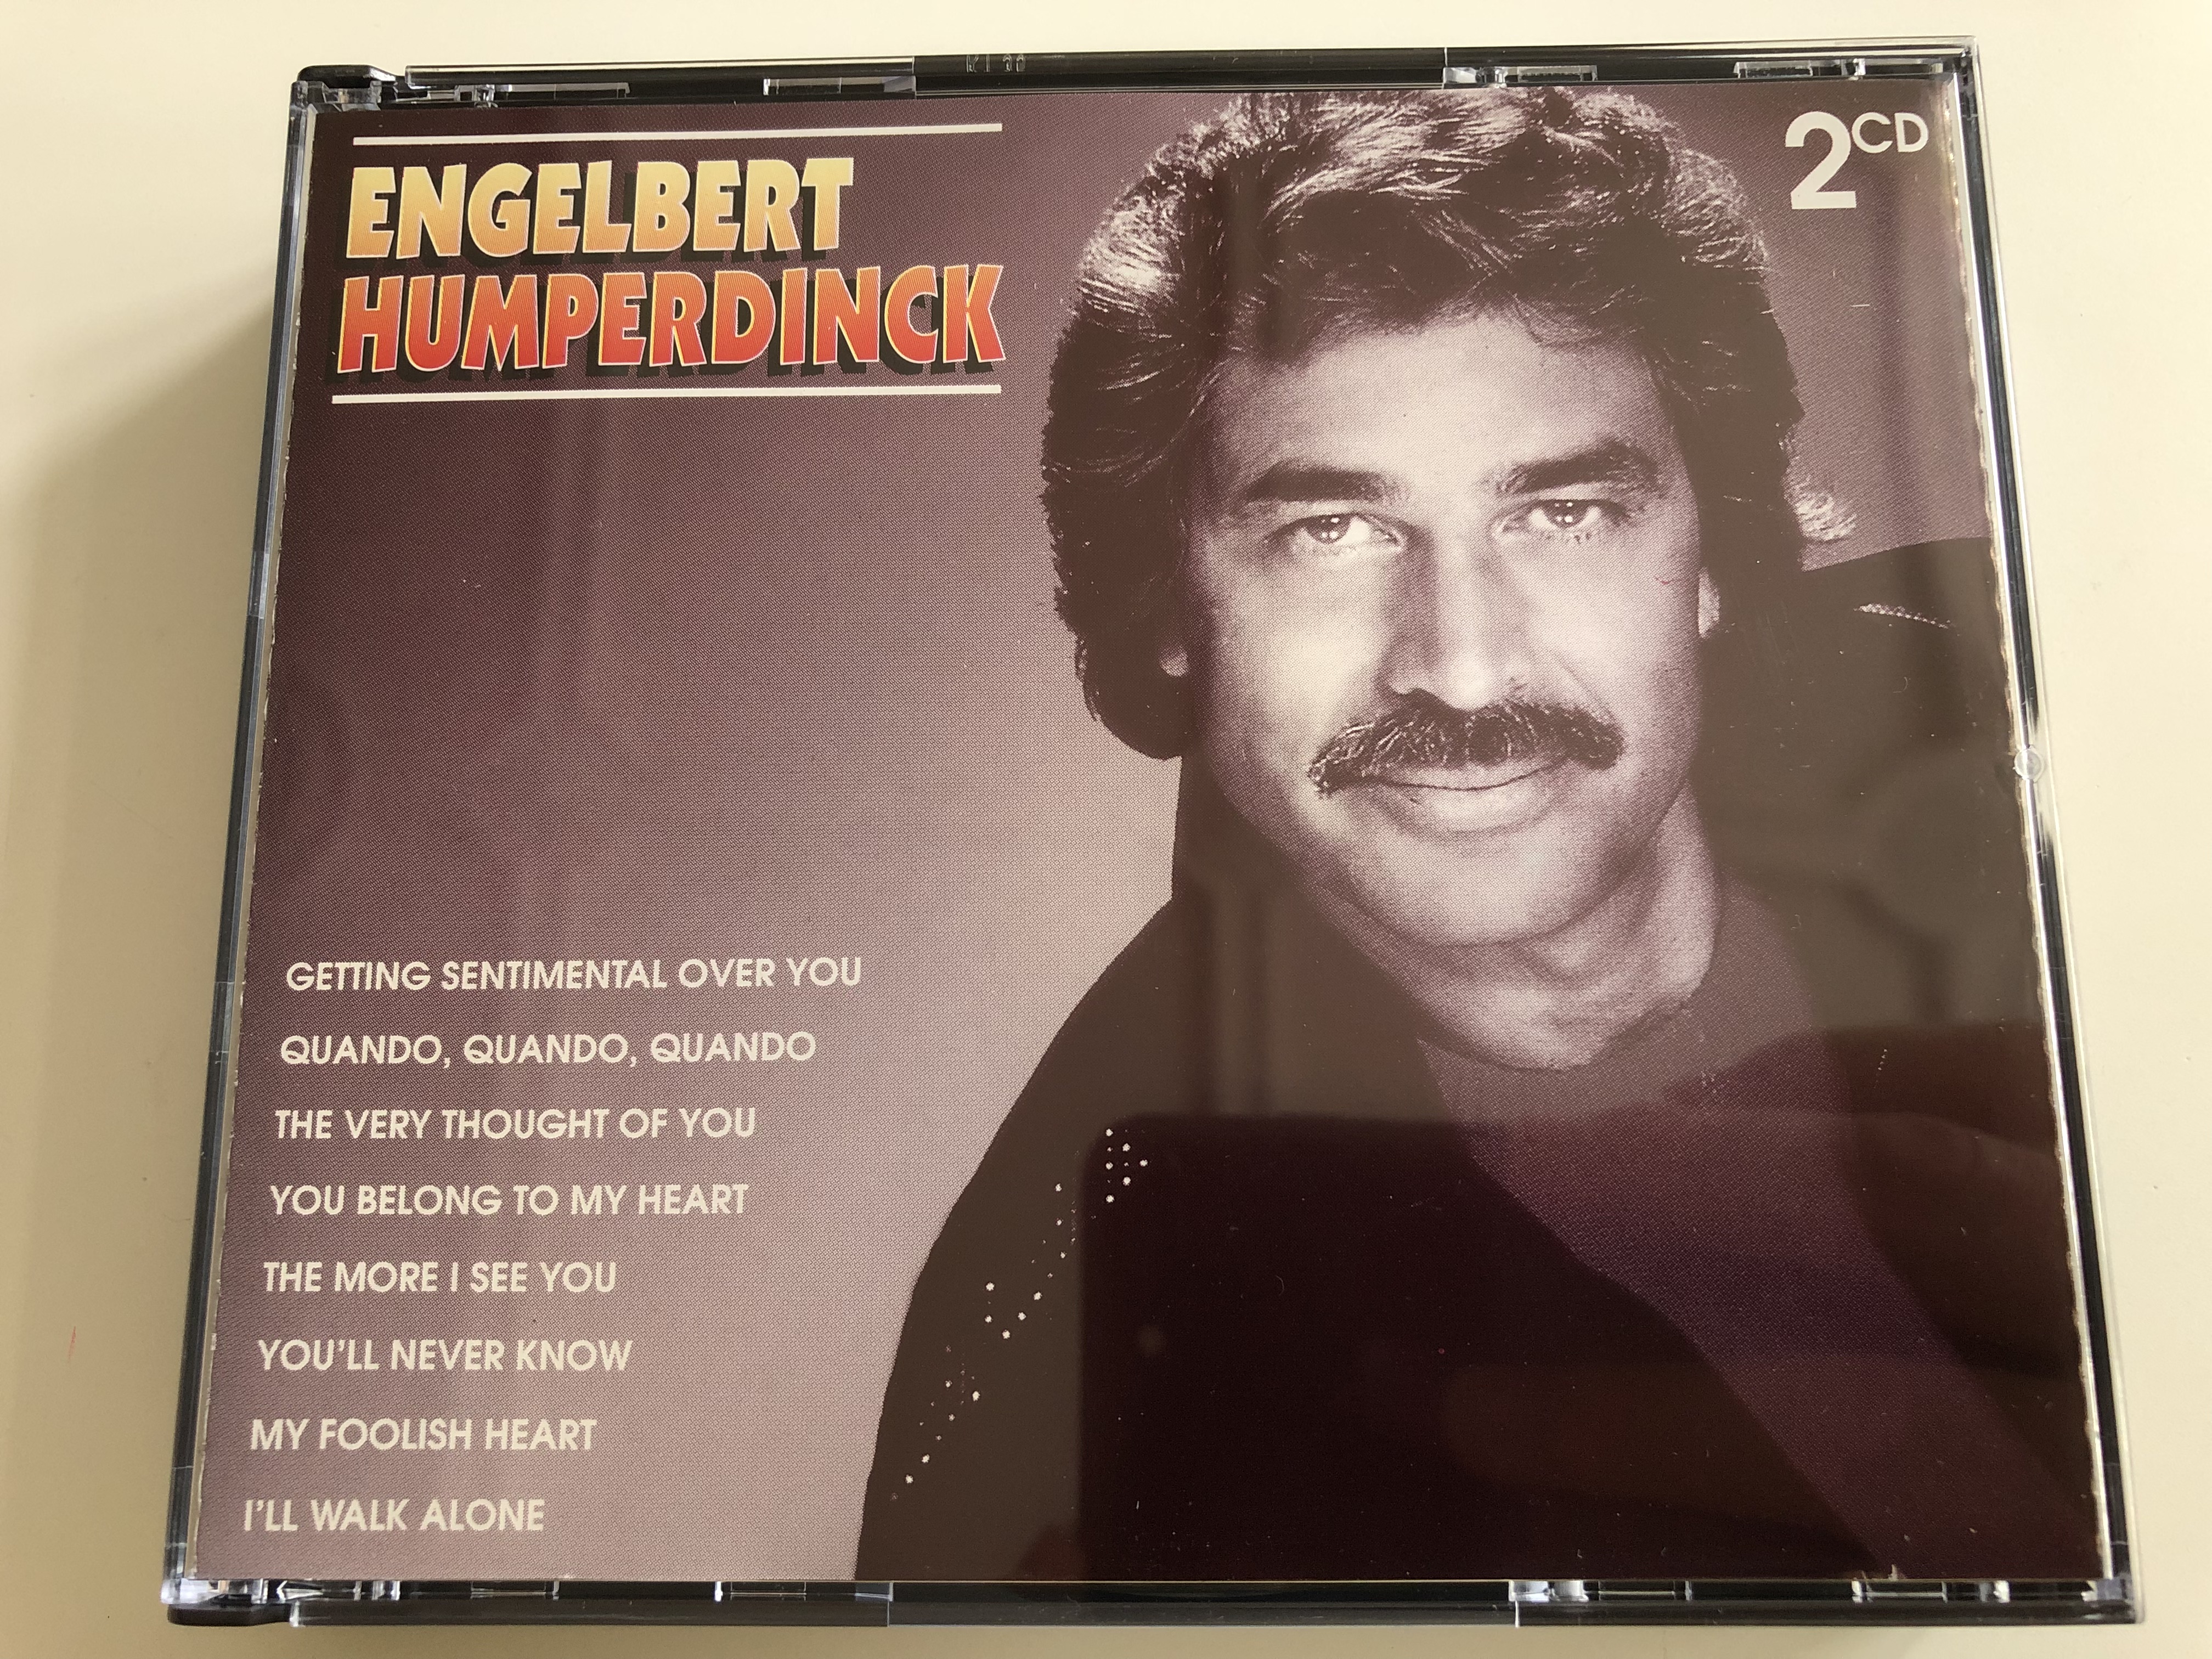 engelbert-humperdinck-2x-audio-cd-1994-spanish-eyes-quando-quando-quando-embraceable-you-the-more-i-see-you-harbour-lights-but-beautiful-kbox-204-livingstone-productions-1-.jpg